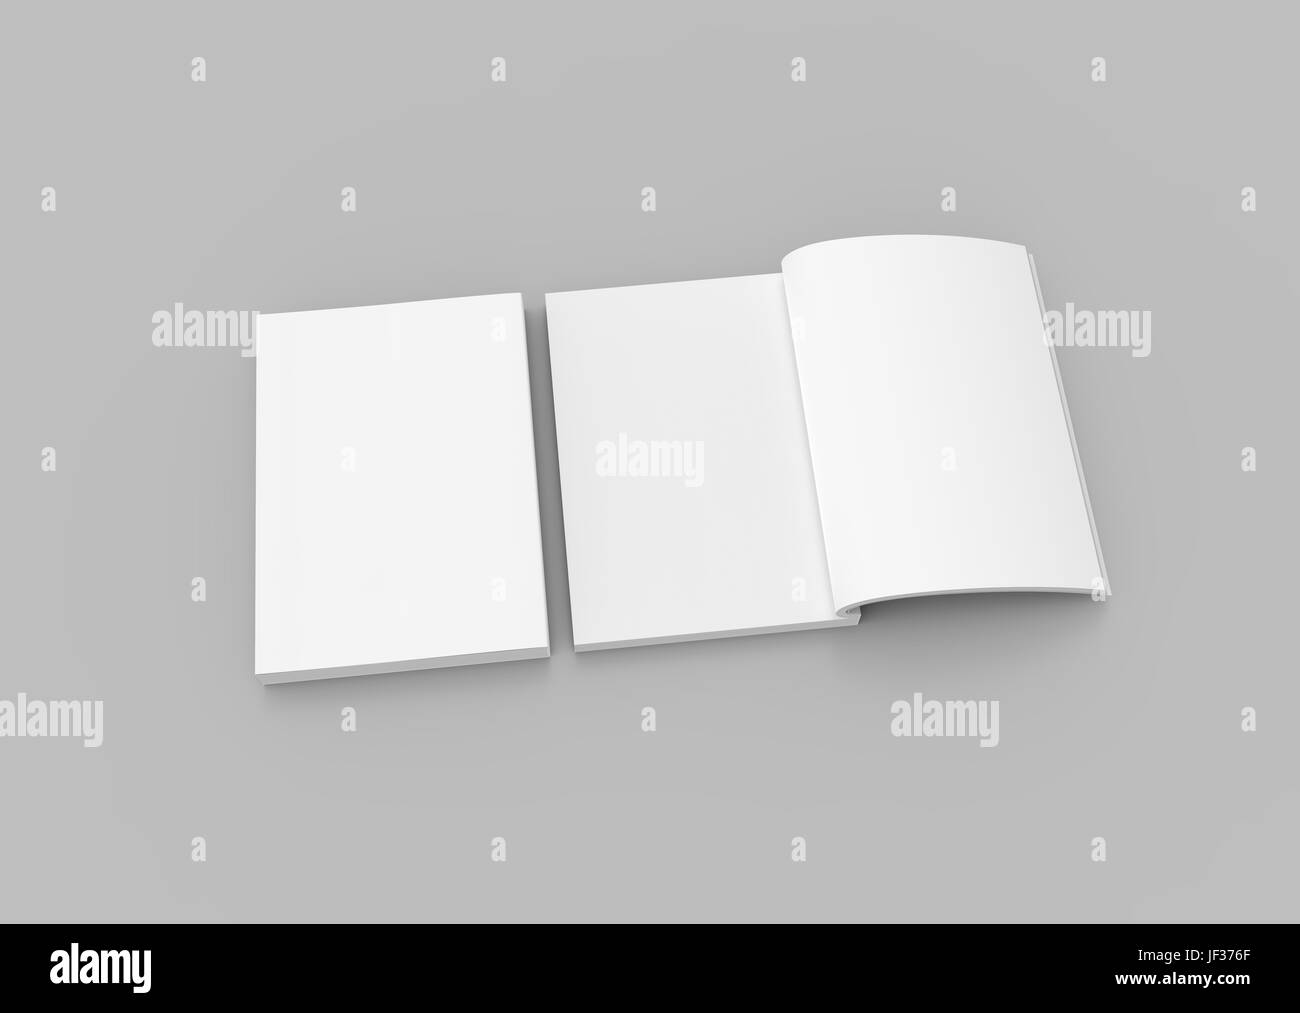 3d blank books on white background Stock Photo by ©digitalgenetics